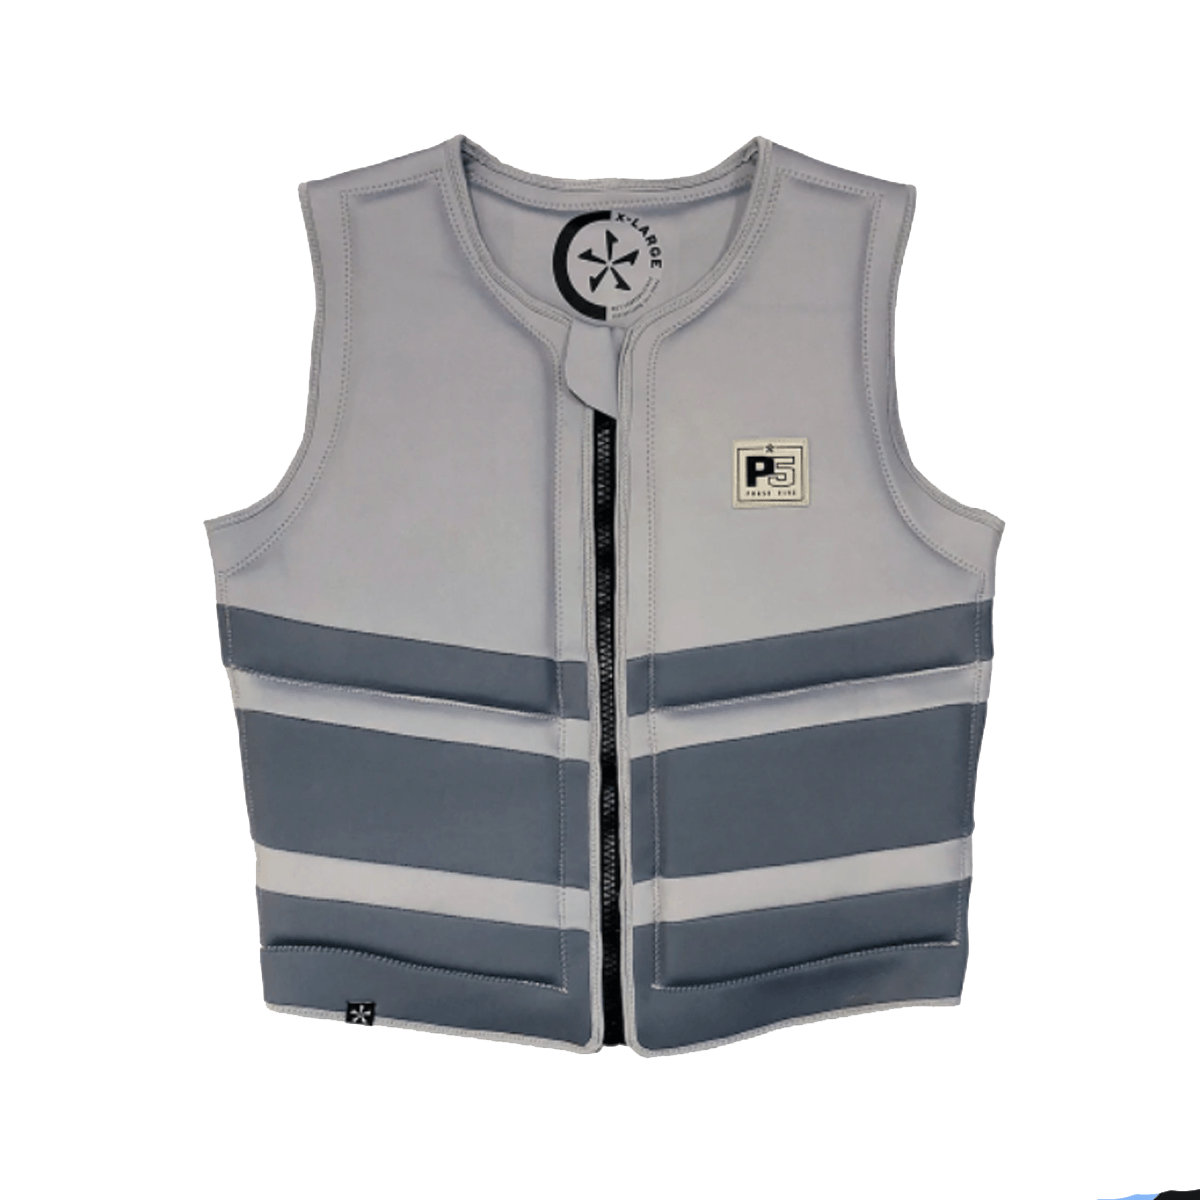 Phase 5 Ladies Pro Vest in Grey - BoardCo